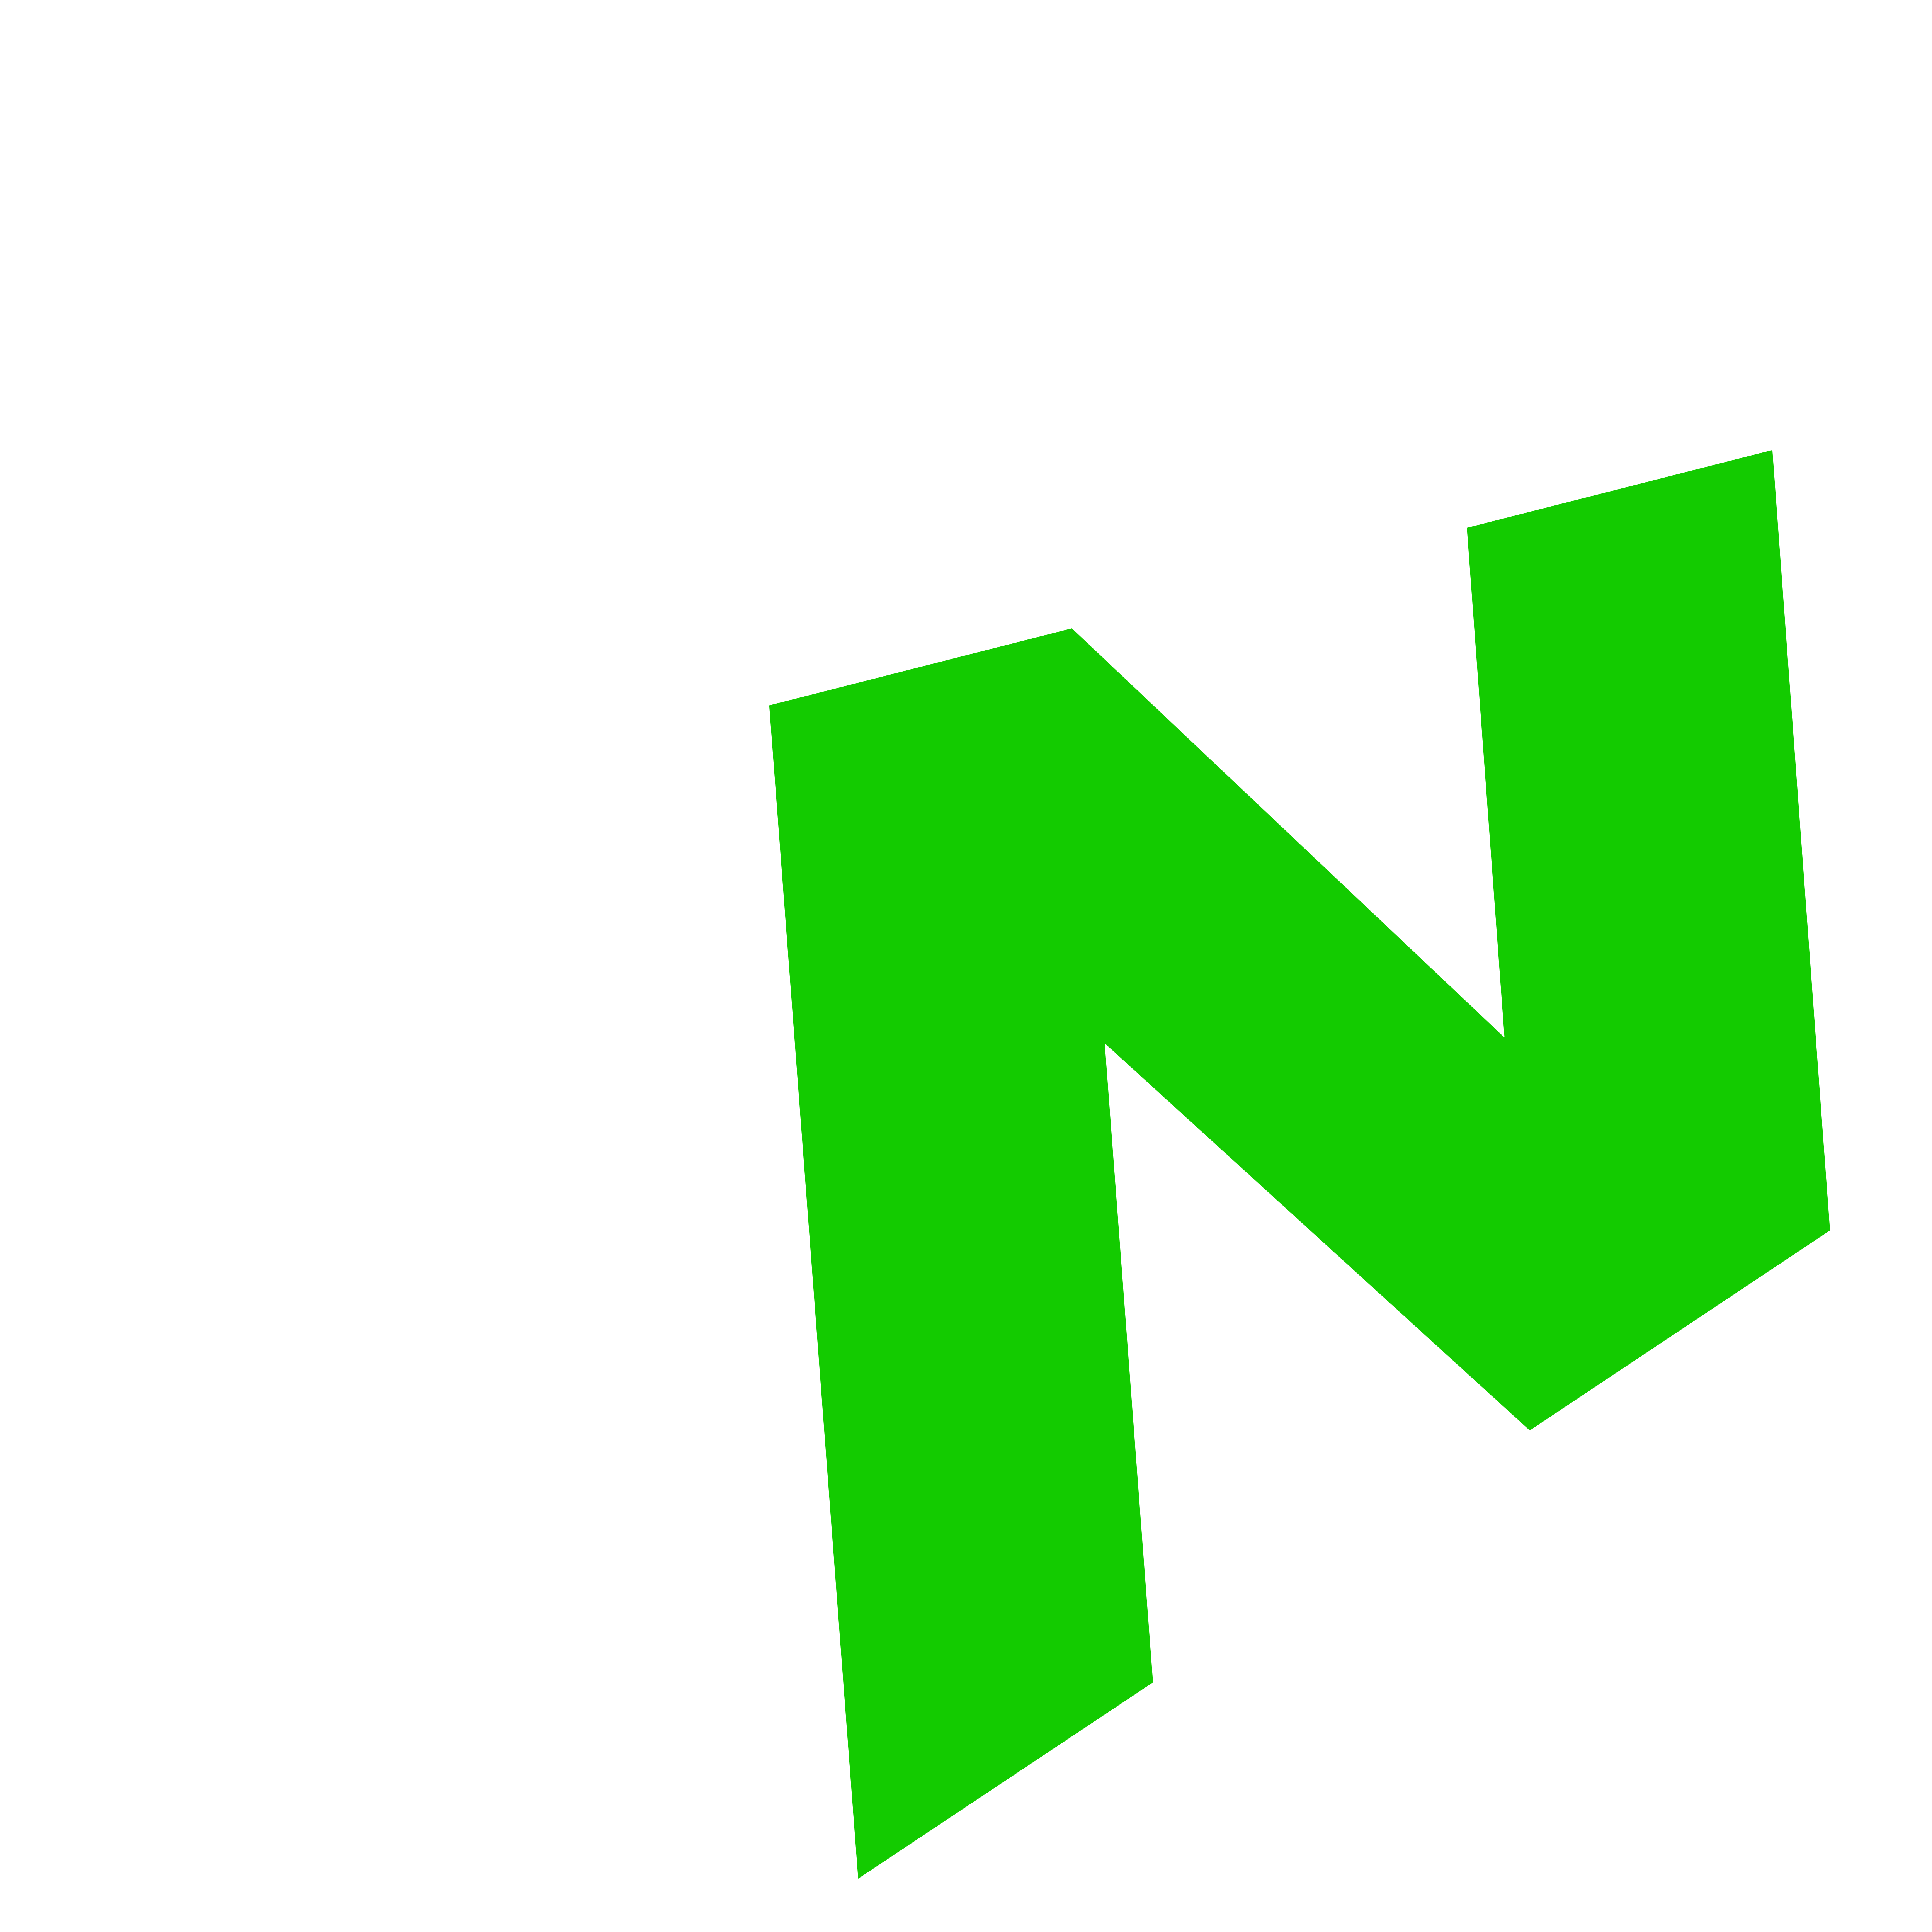 TurboNode Logo